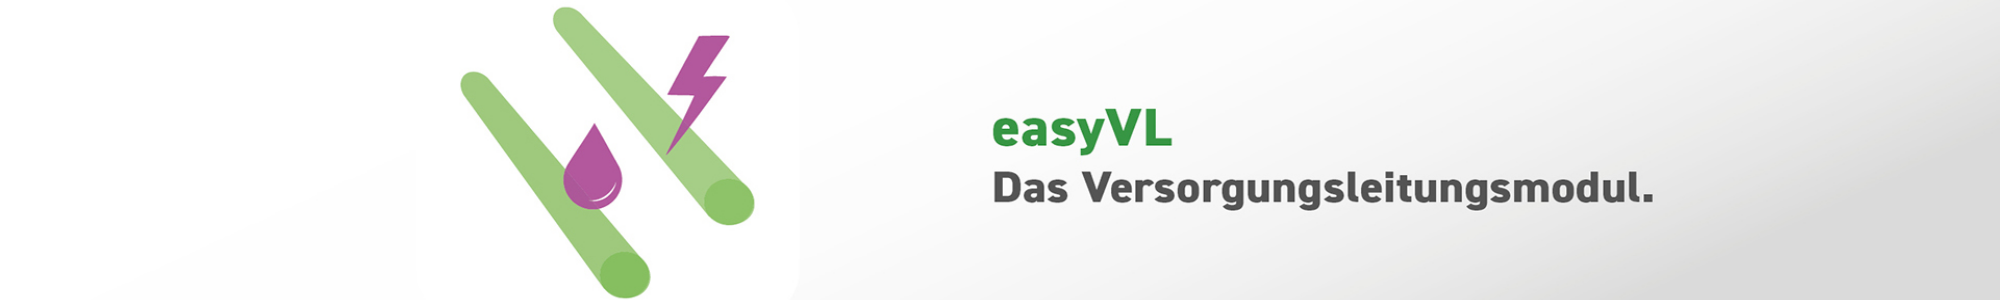 easyVL - isl-kocher GmbH